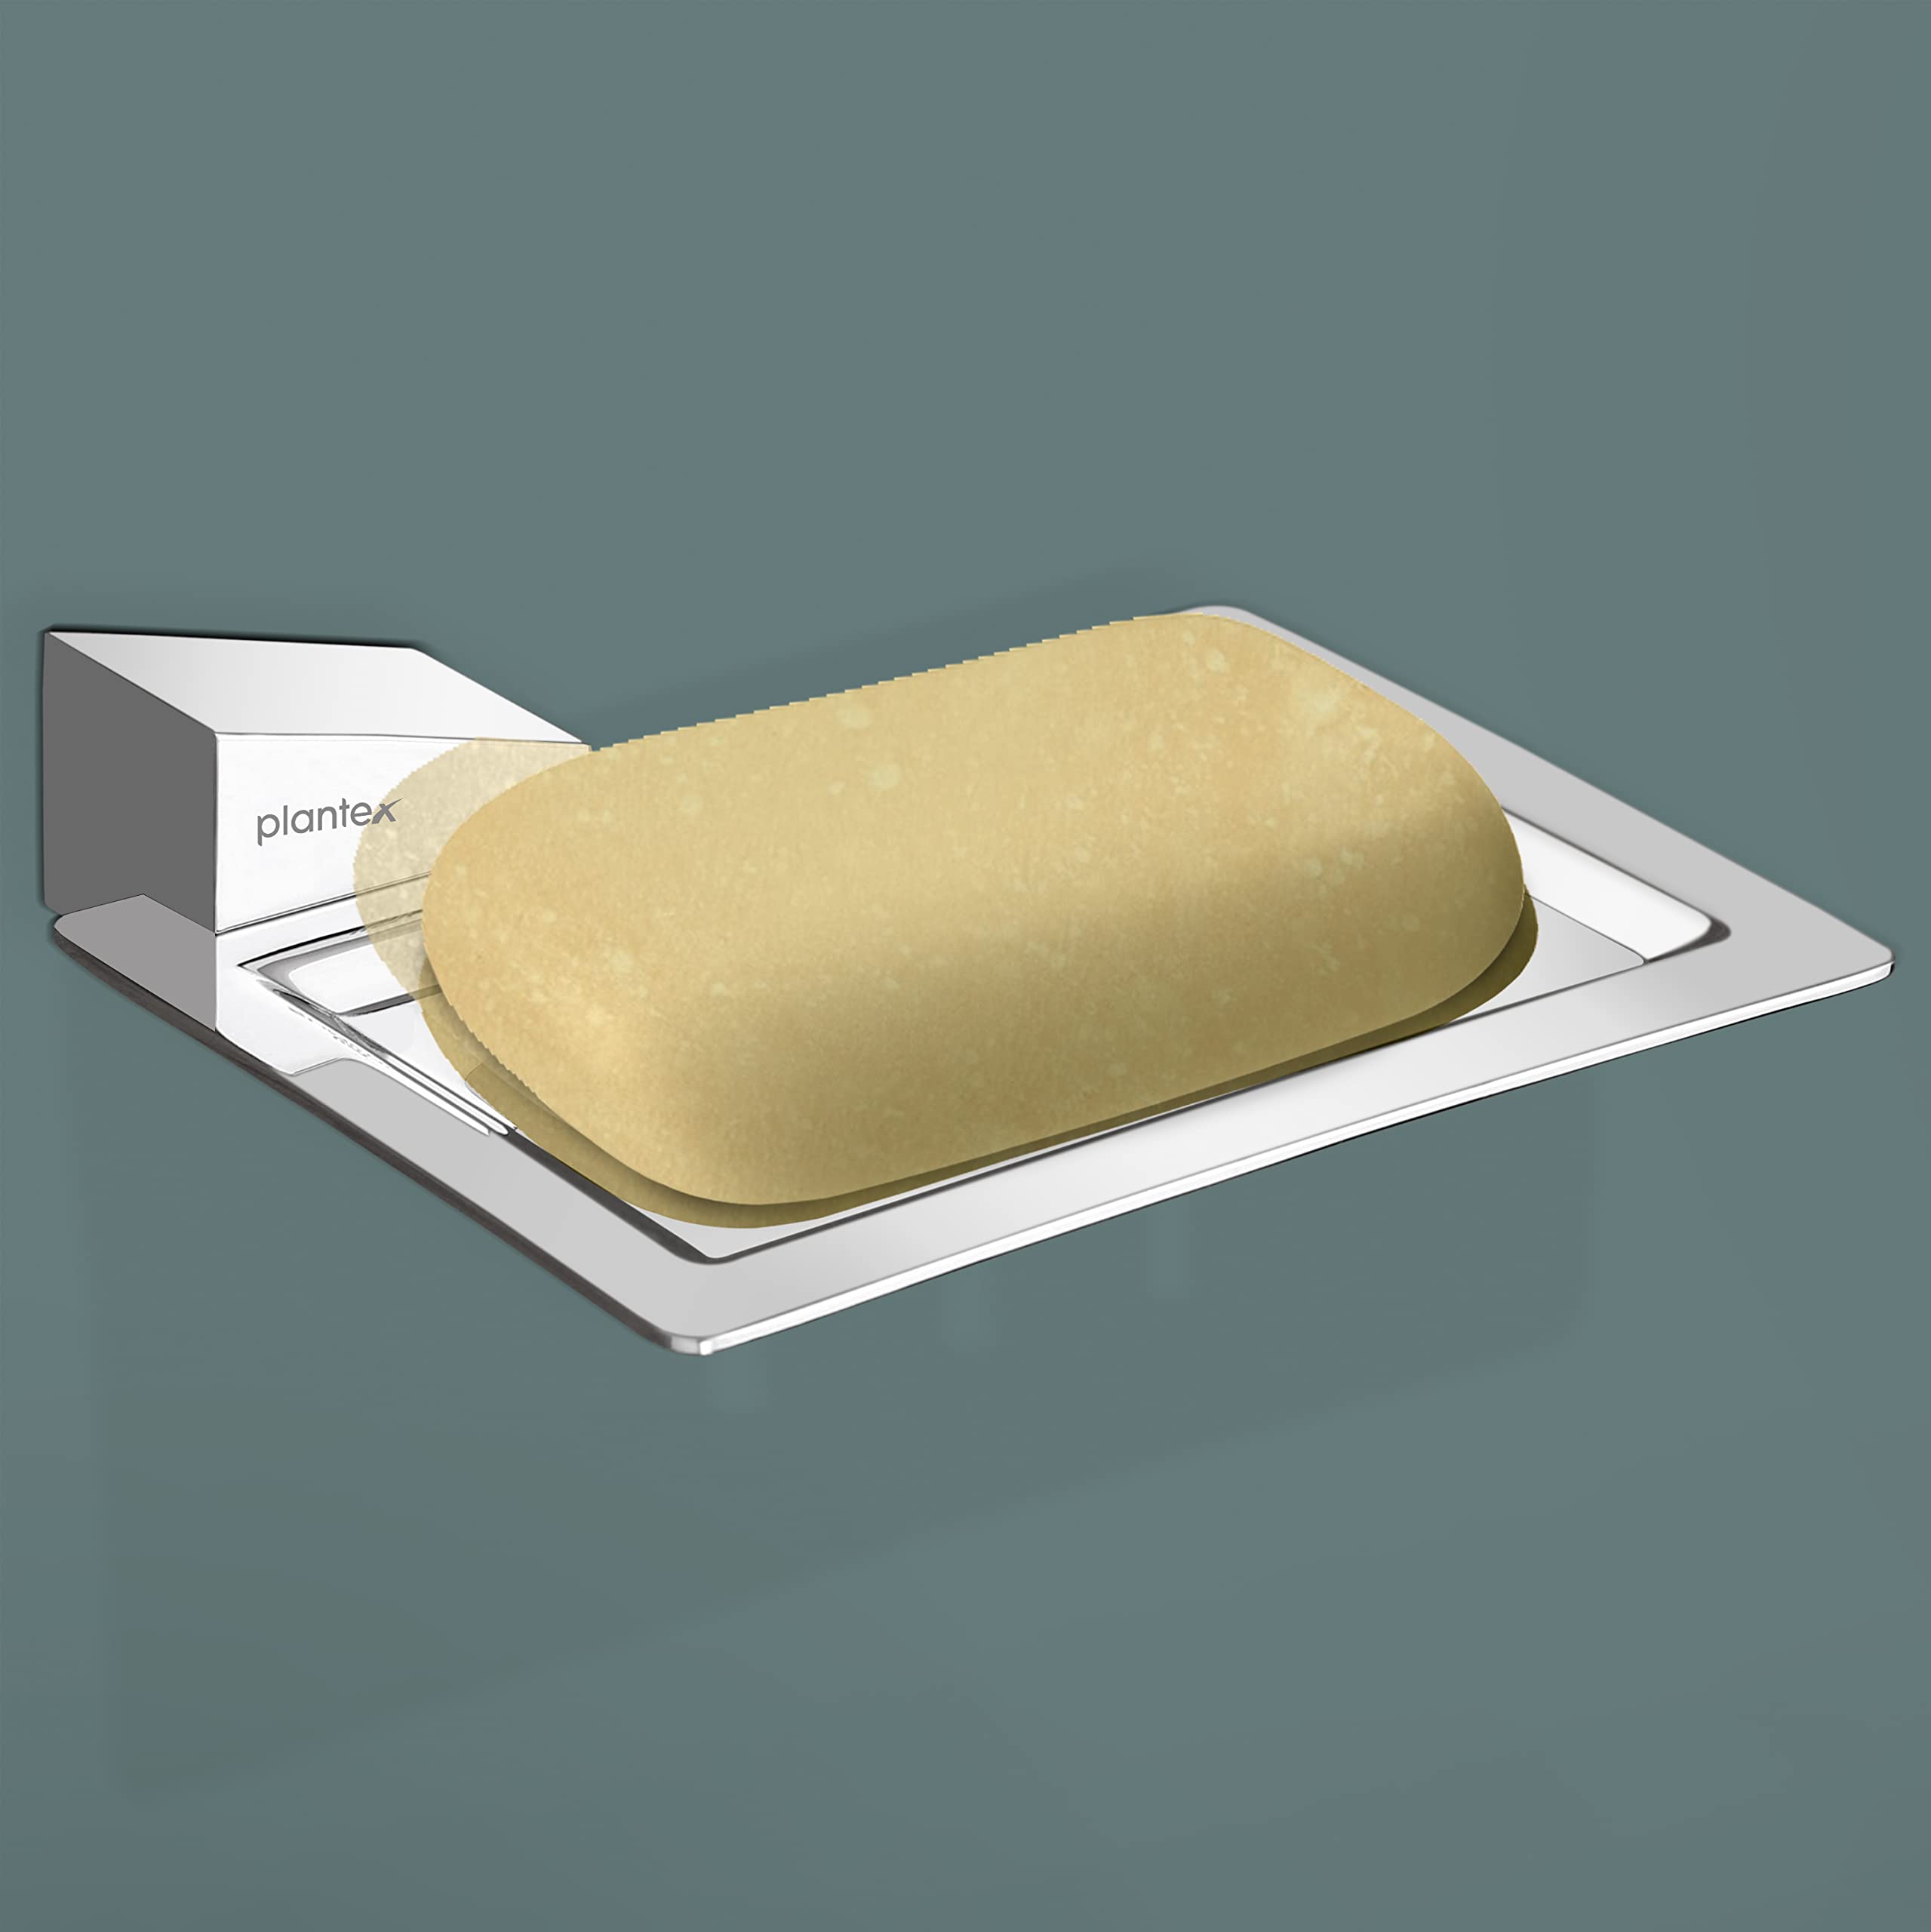 Plantex Fully Brass Smero Soap Dish Stand for Bathroom & Kitchen/Soap Dish/Bathroom Accessories - Chrome (AR-3134)